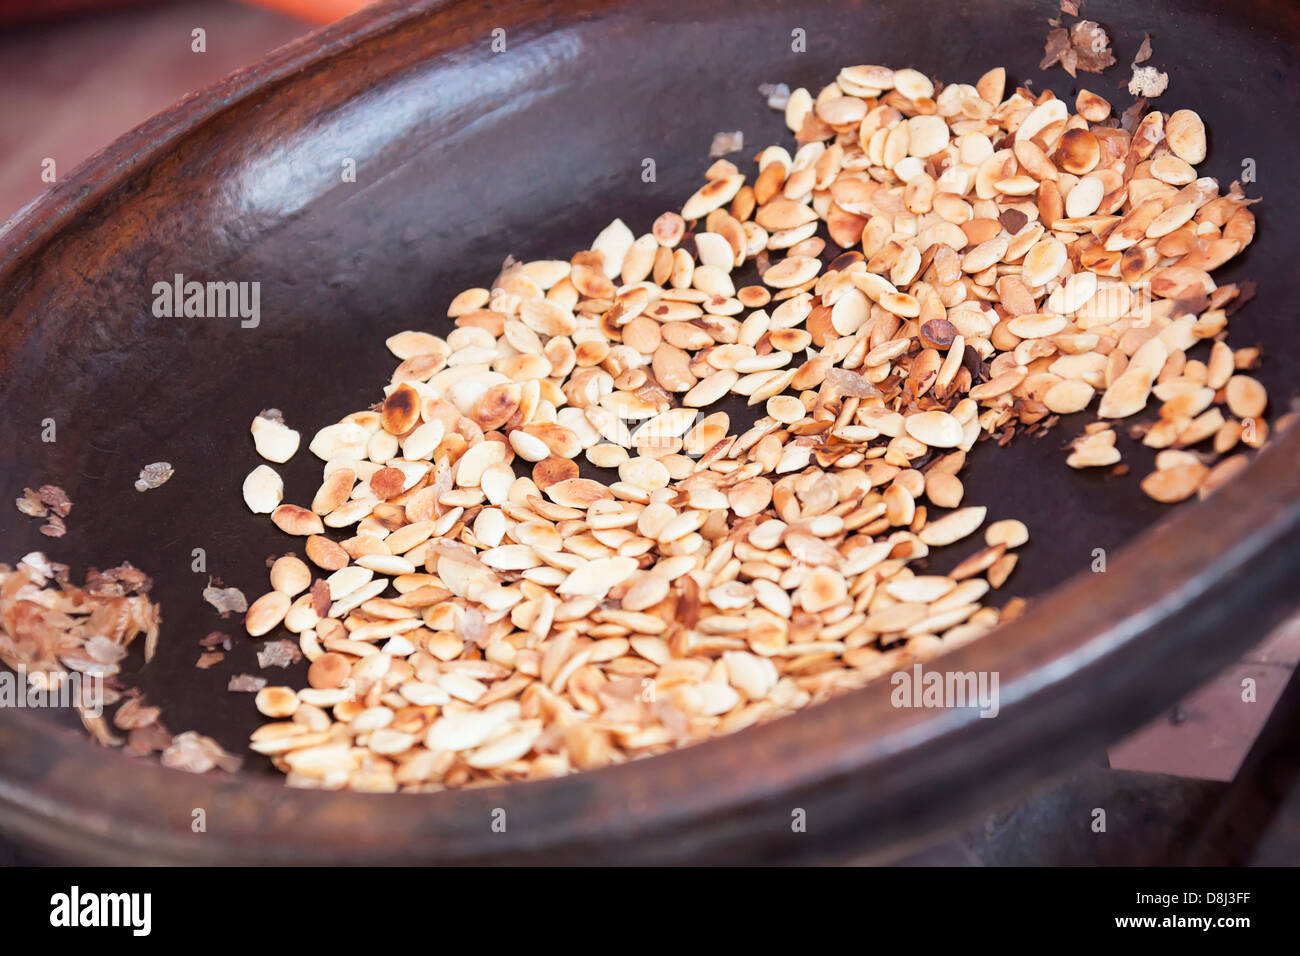 Roasted argan kernels in a frying pan. Stock Photo